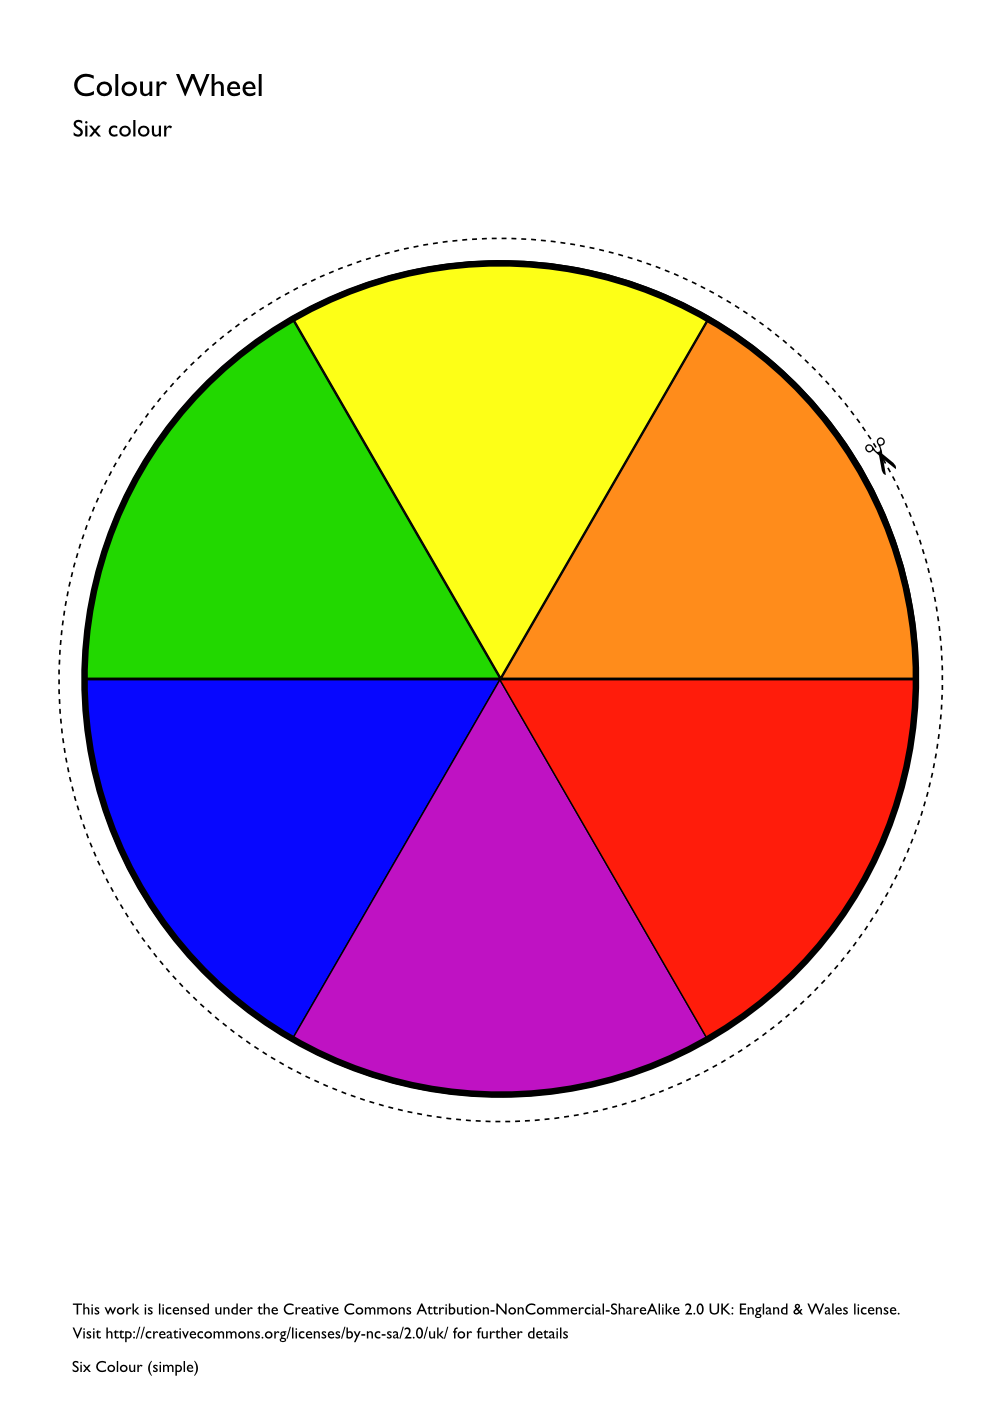 Beki's visual communication process 2011: Colour?